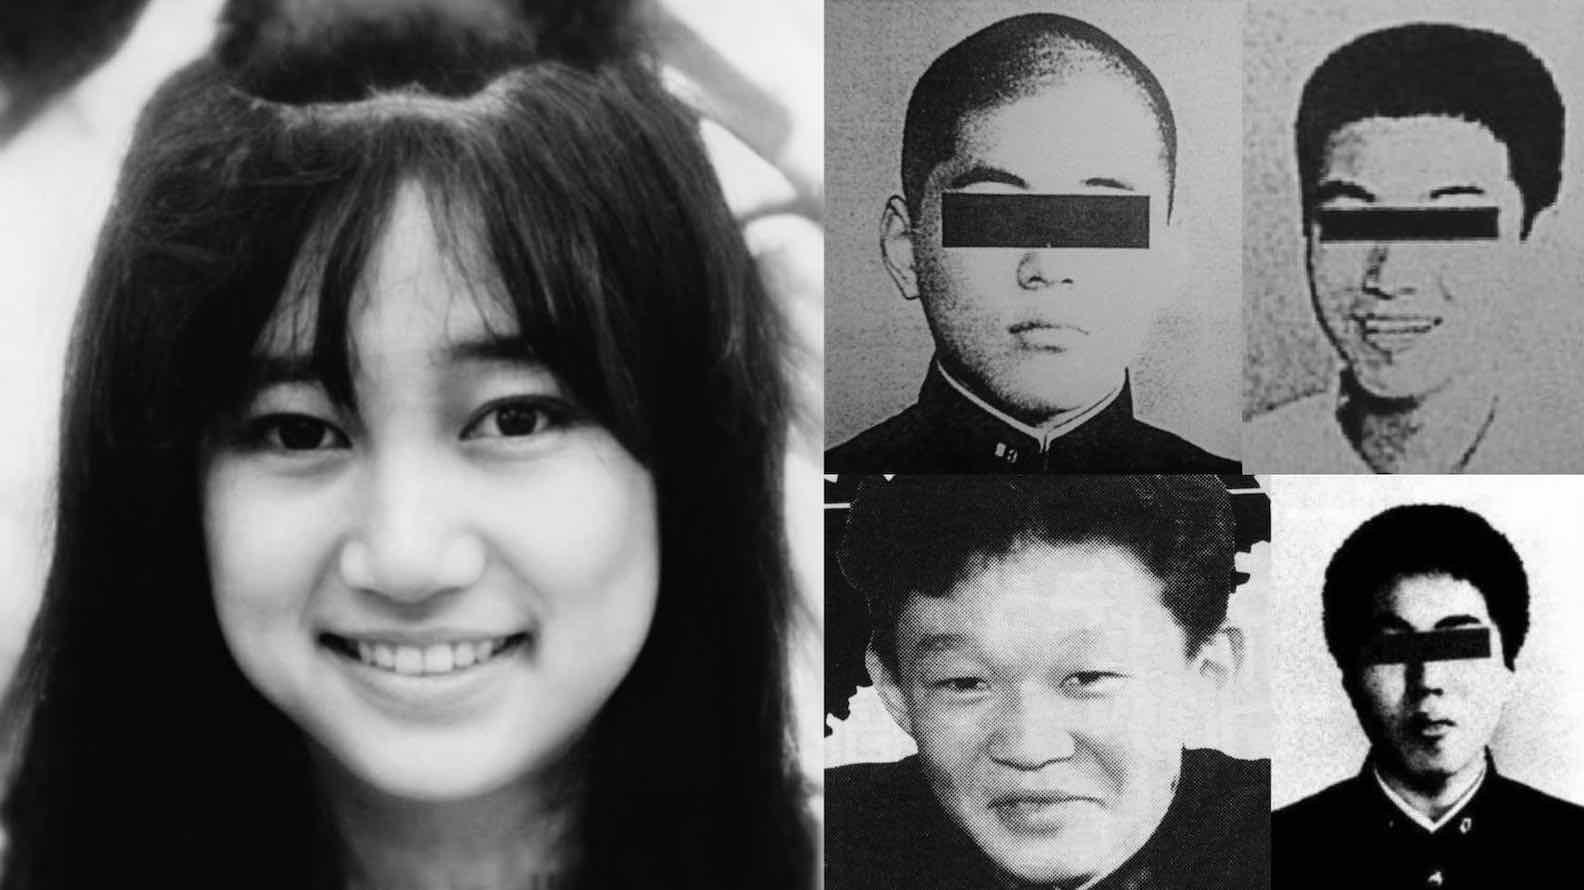 Junko Furuta Case: The Brutal Murder Story of a Girl